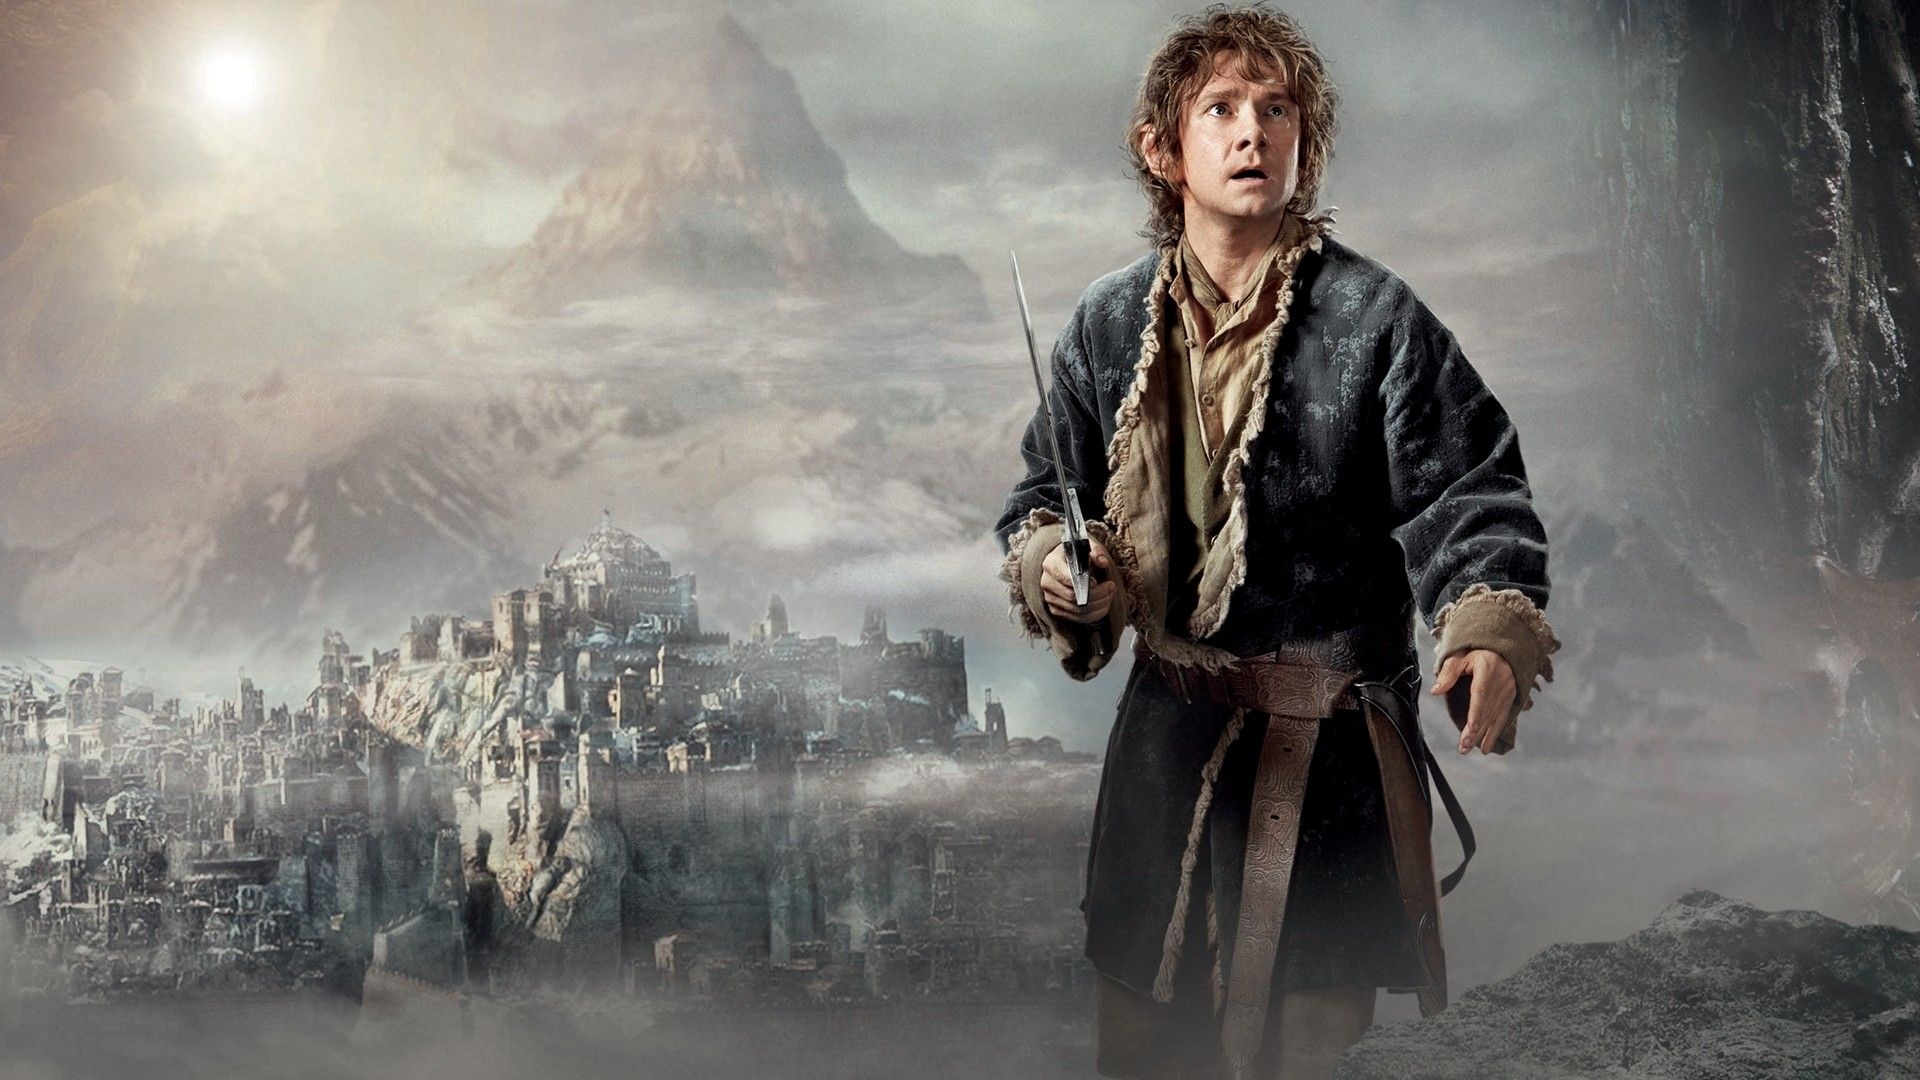 Bilbo Baggins character, Hobbit film series, Memorable wallpaper, Mythical world, 1920x1080 Full HD Desktop